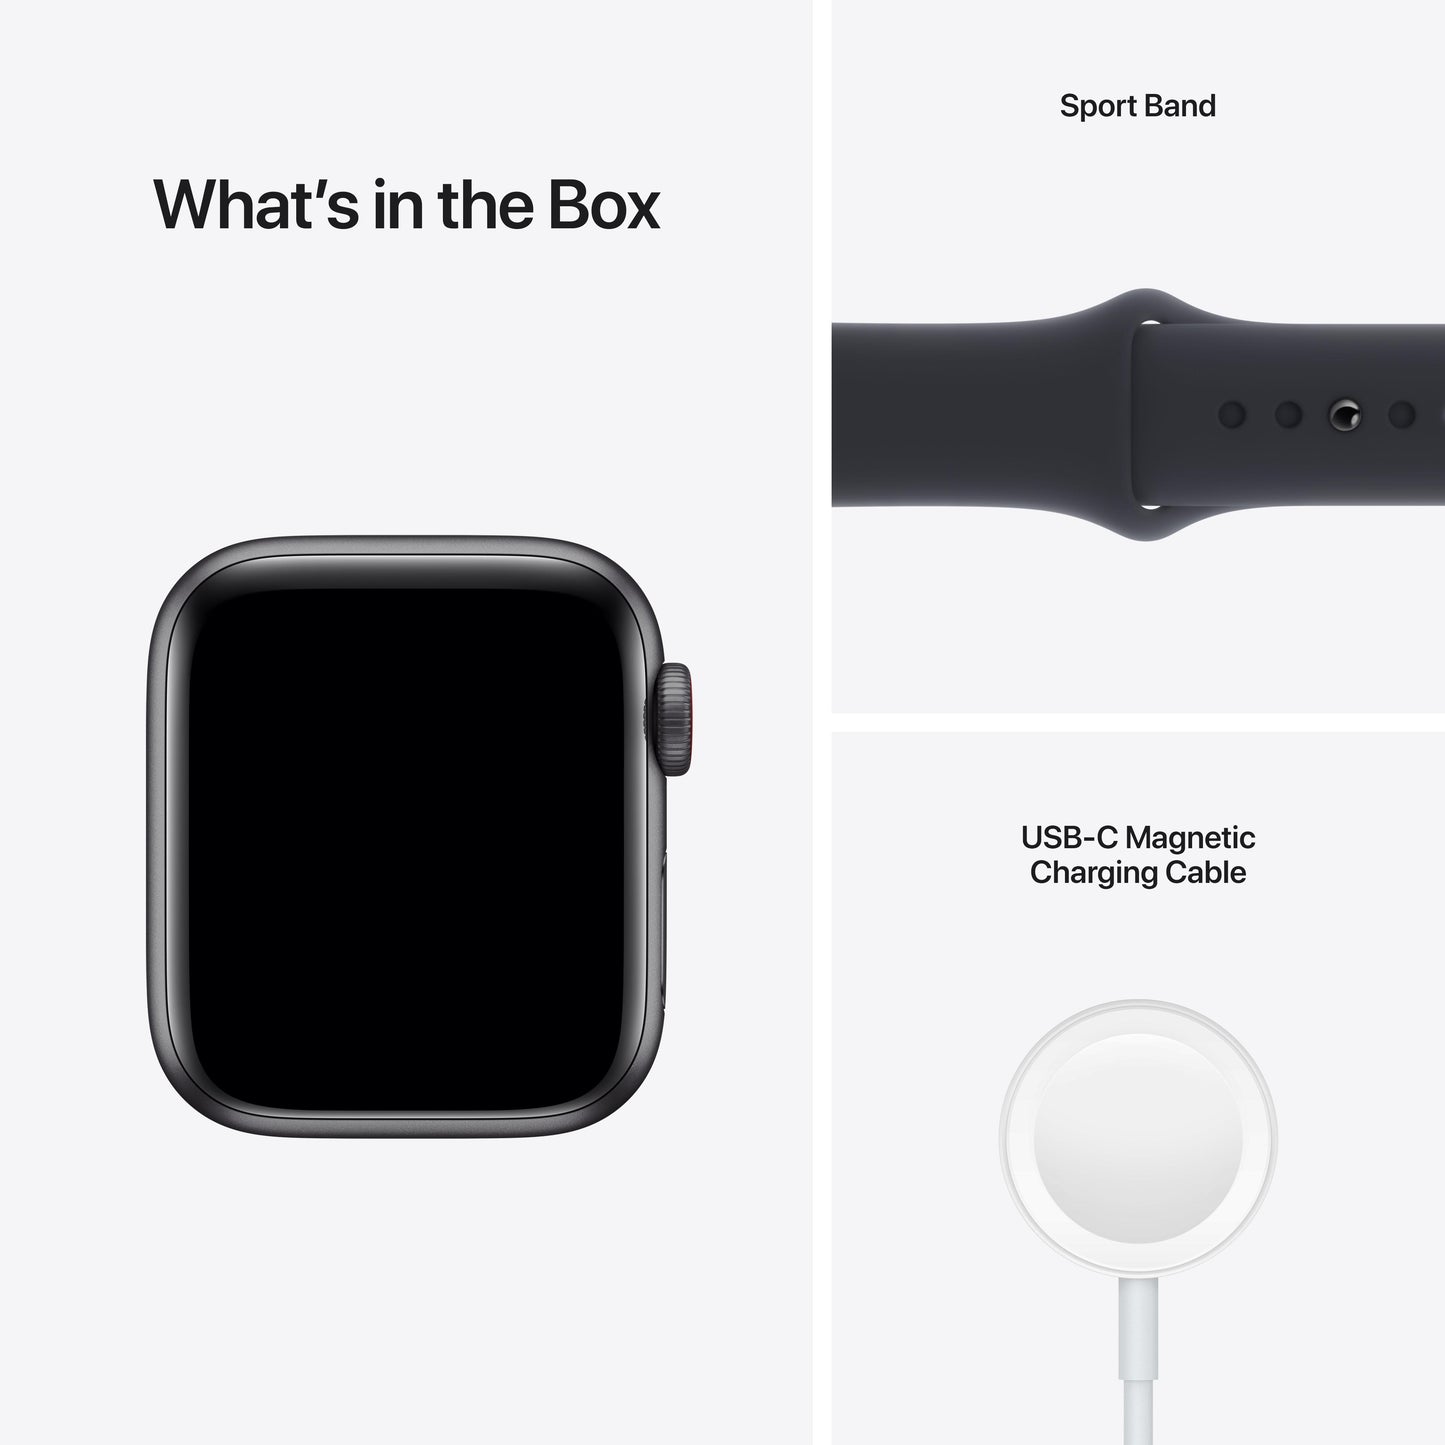 Apple Watch SE GPS + Cellular, 40mm Space Grey Aluminium Case with Midnight Sport Band - Regular